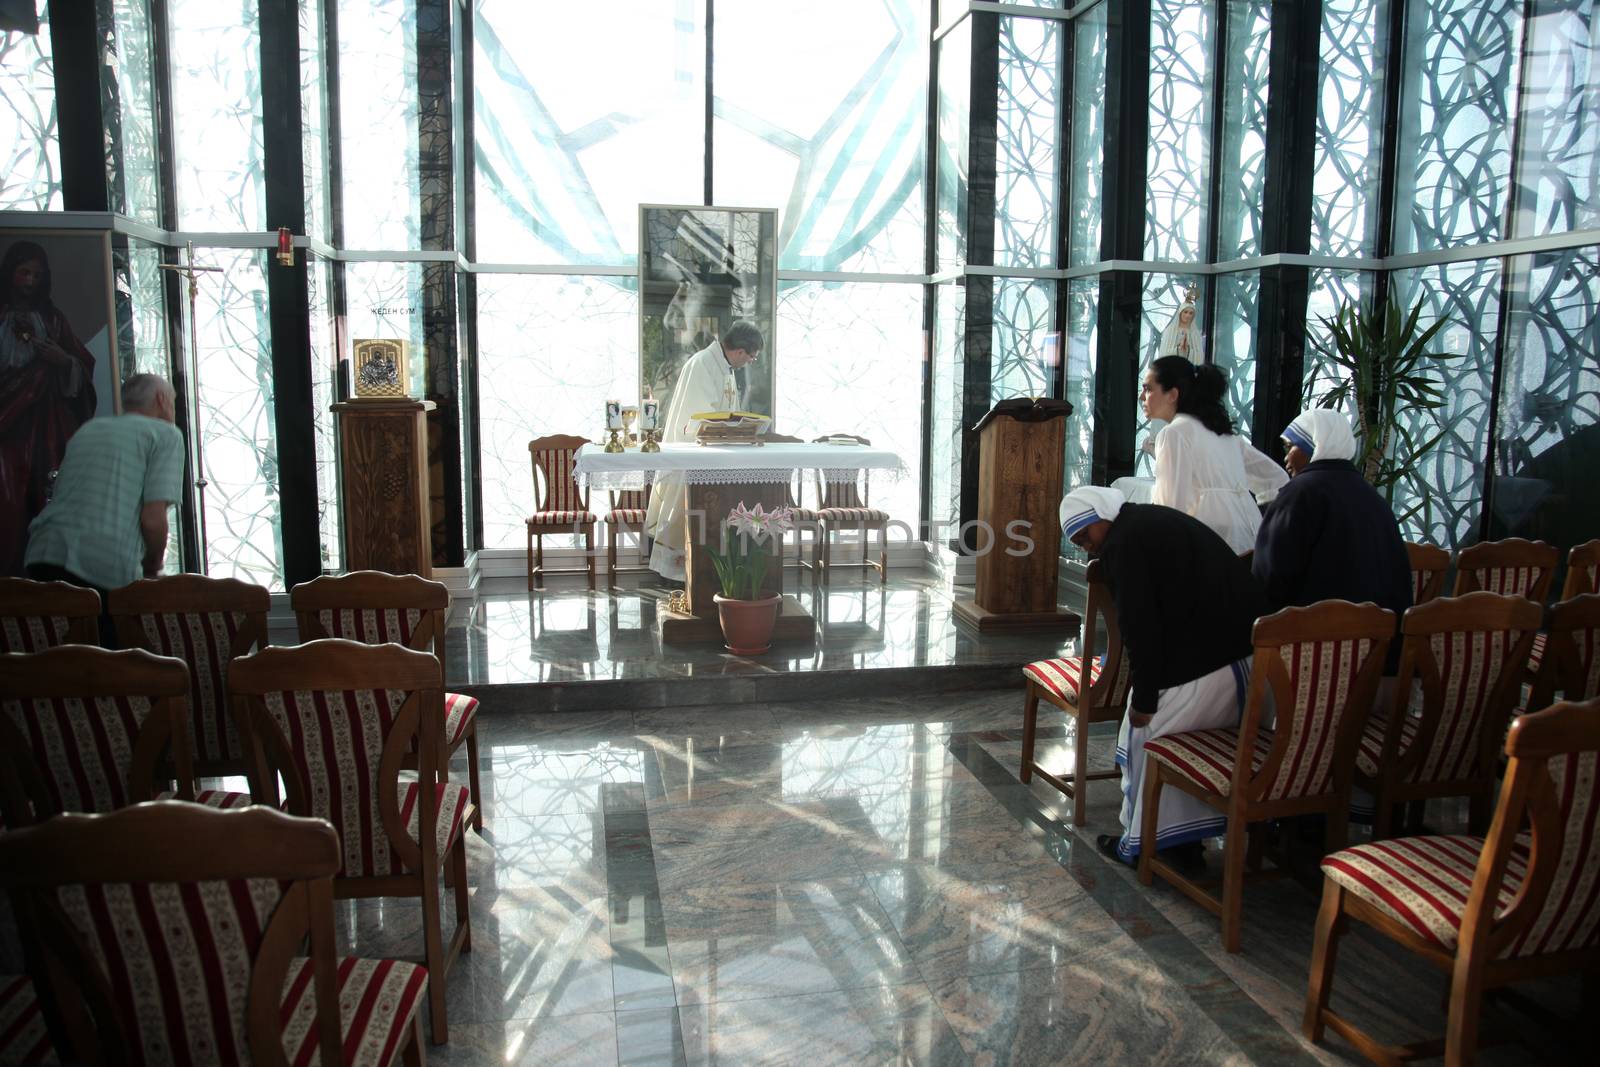 Mass in Chapel in Mother Teresa Memorial House in Skopje, Macedonia on May 18, 2013.